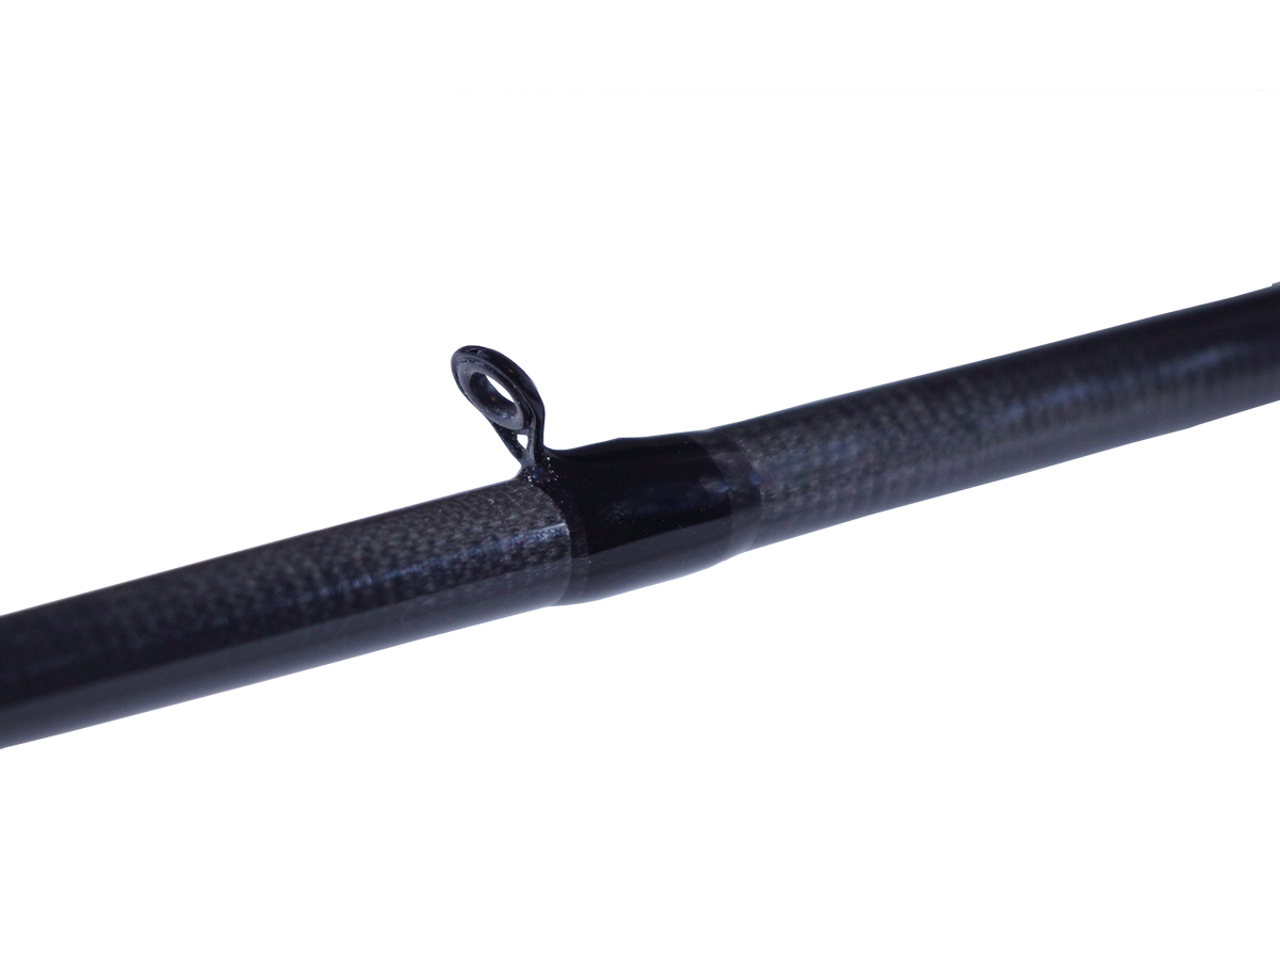 7' Medium Light Casting Rod For Saltwater Fishing